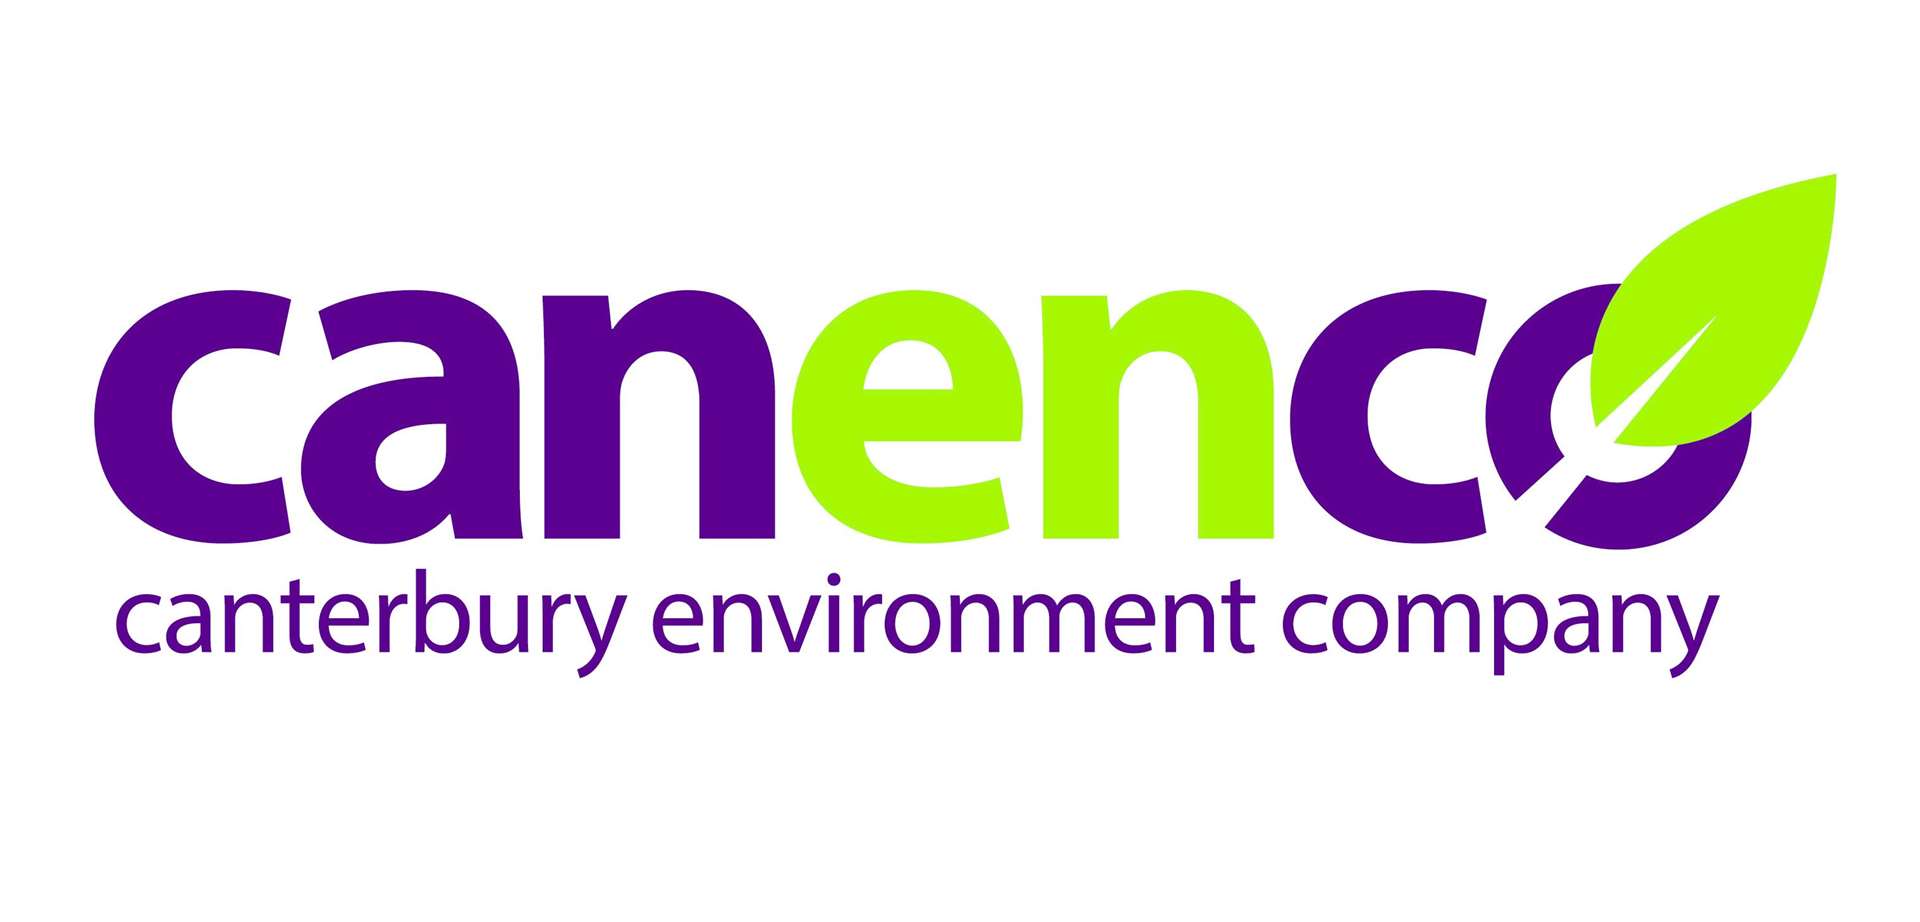 The logo for the Canterbury Environment Company